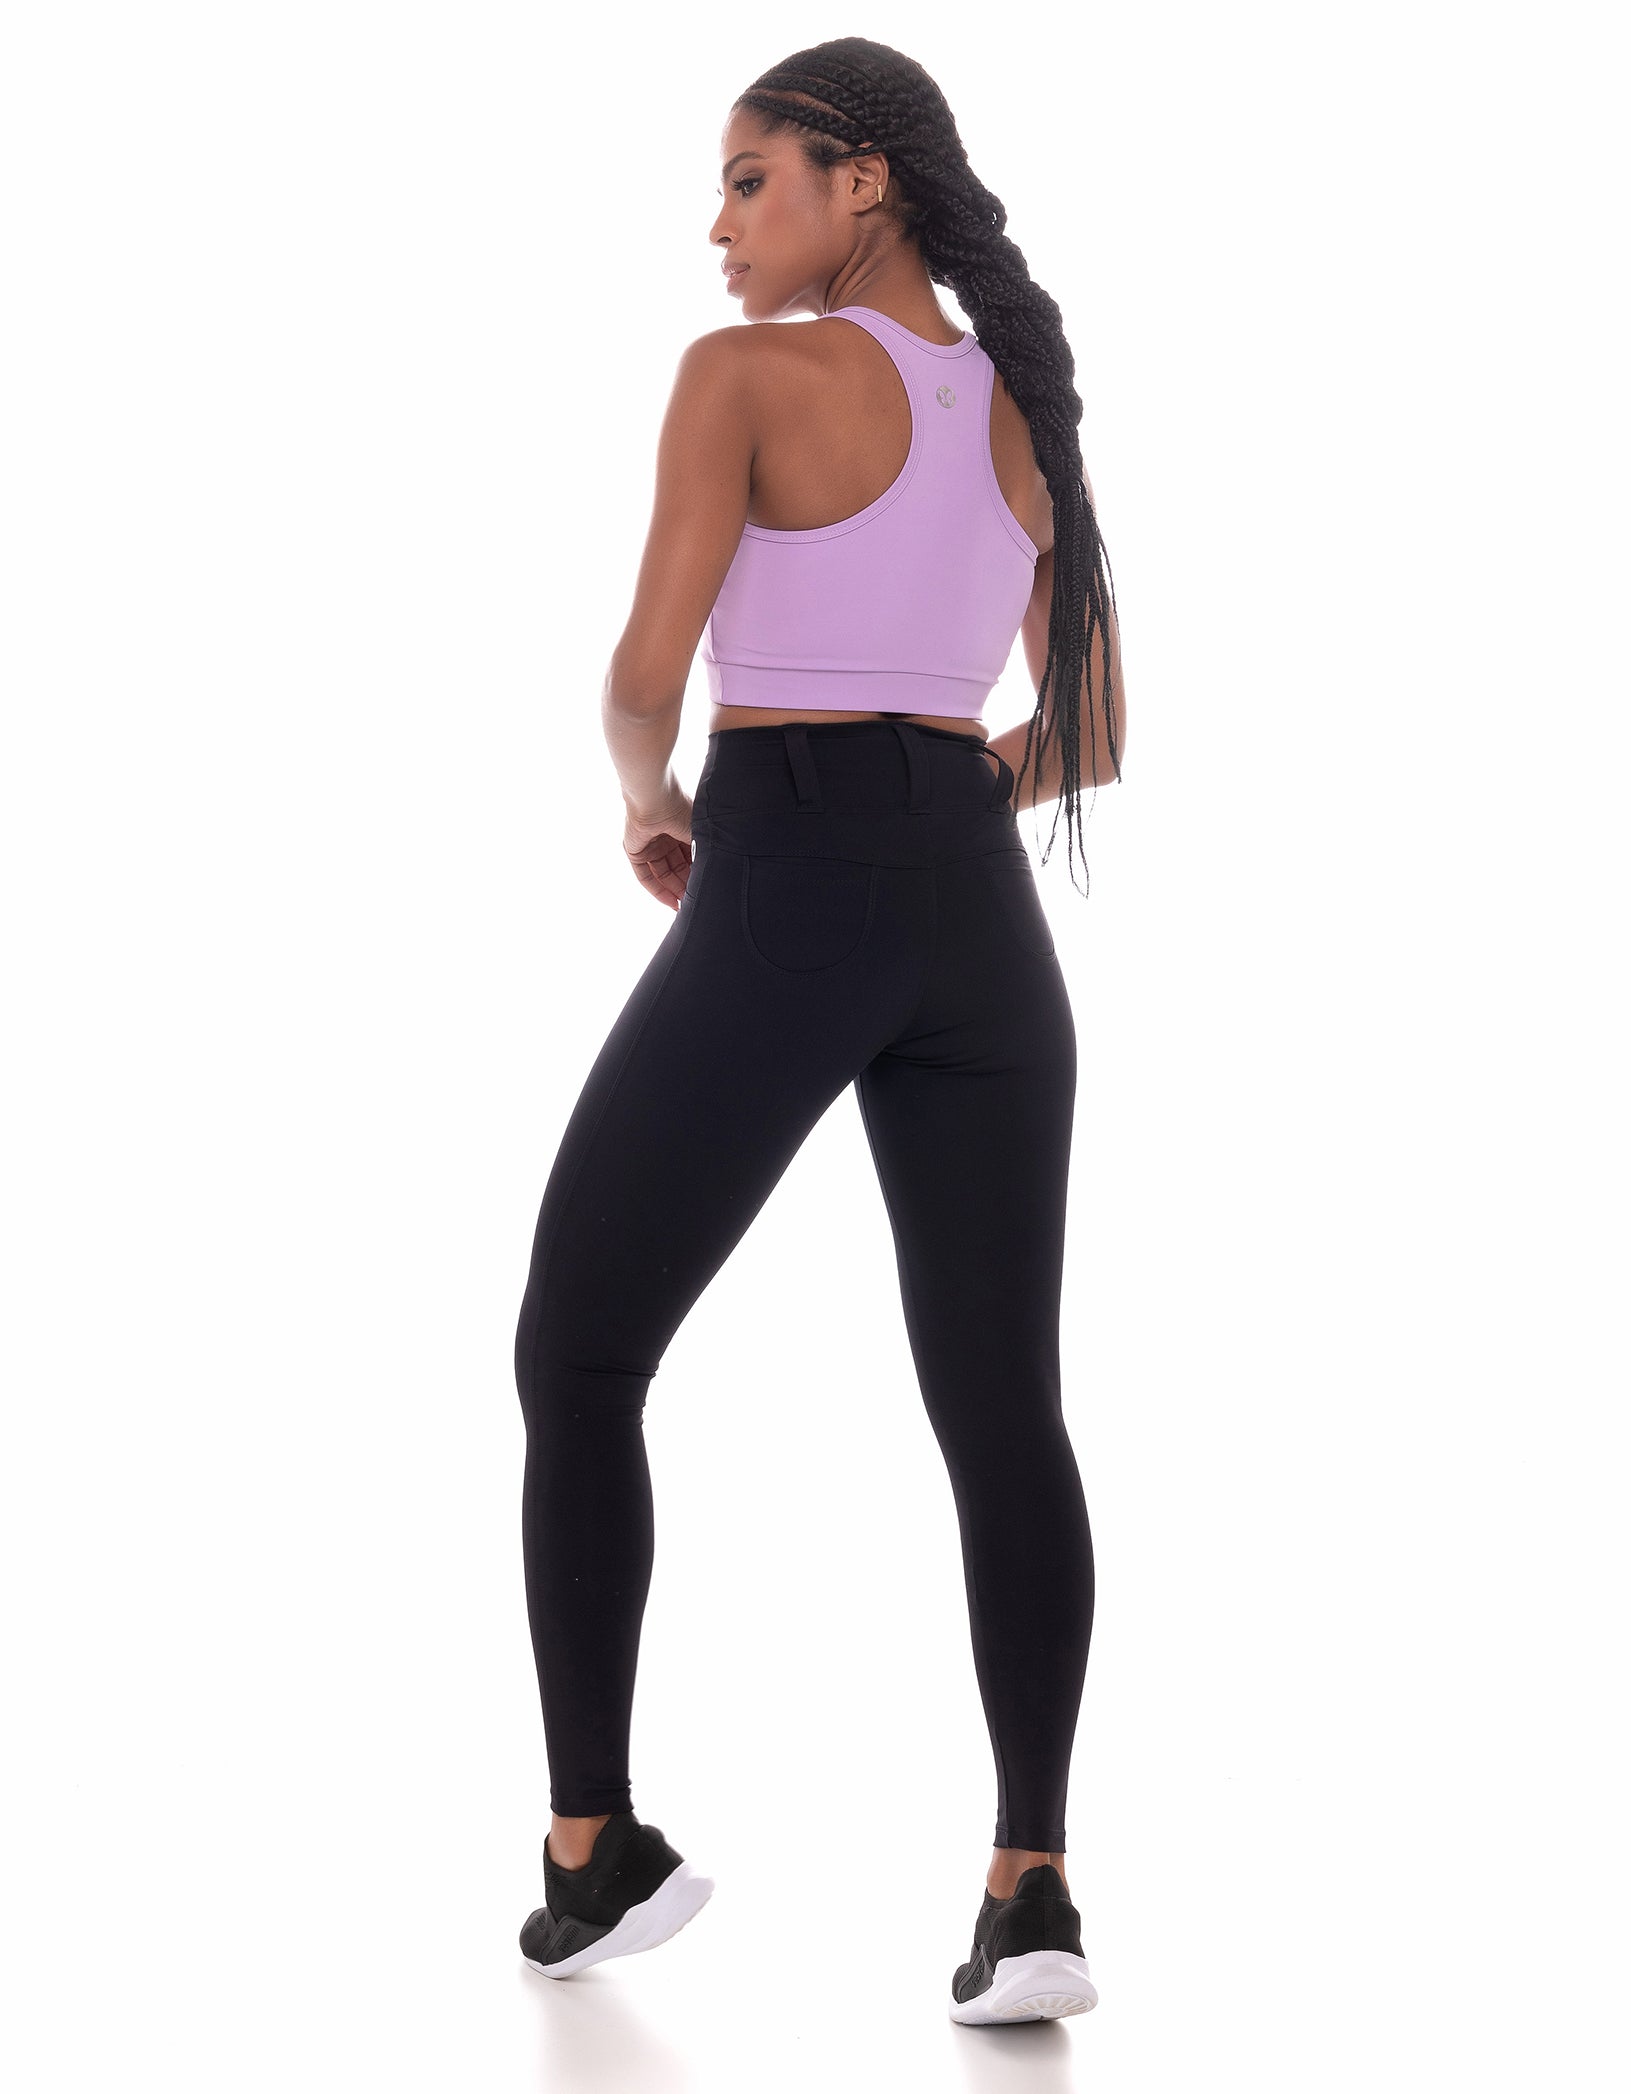 Vestem - Black Ocean leggings leggings - FS1081.C0002